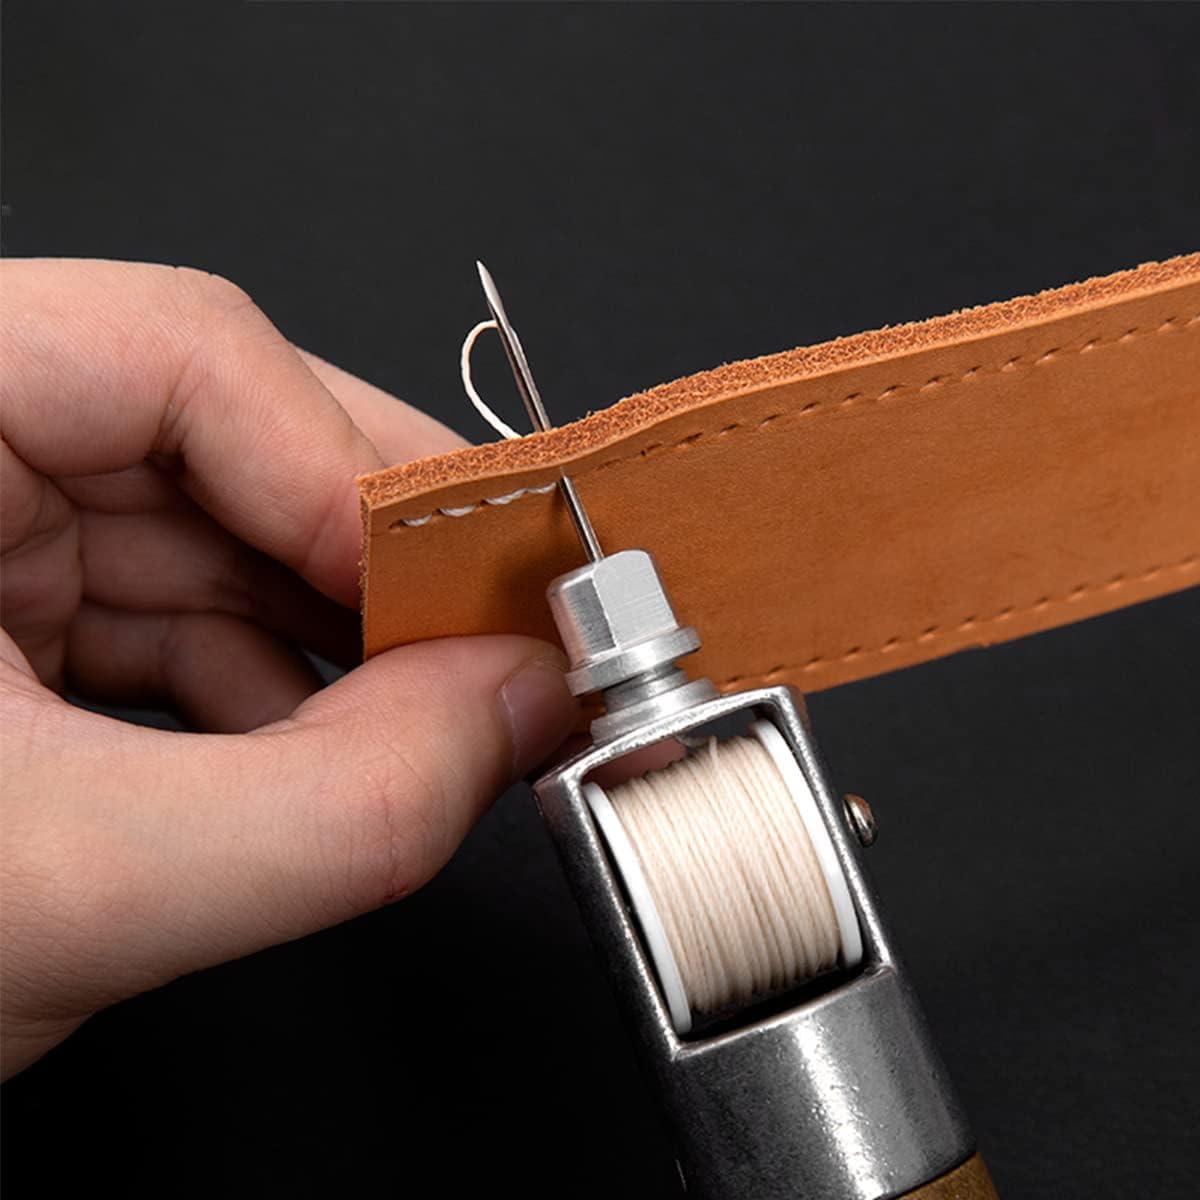 WUTA Professional Leather Craft Tools Kit Hand Sewing Stitching